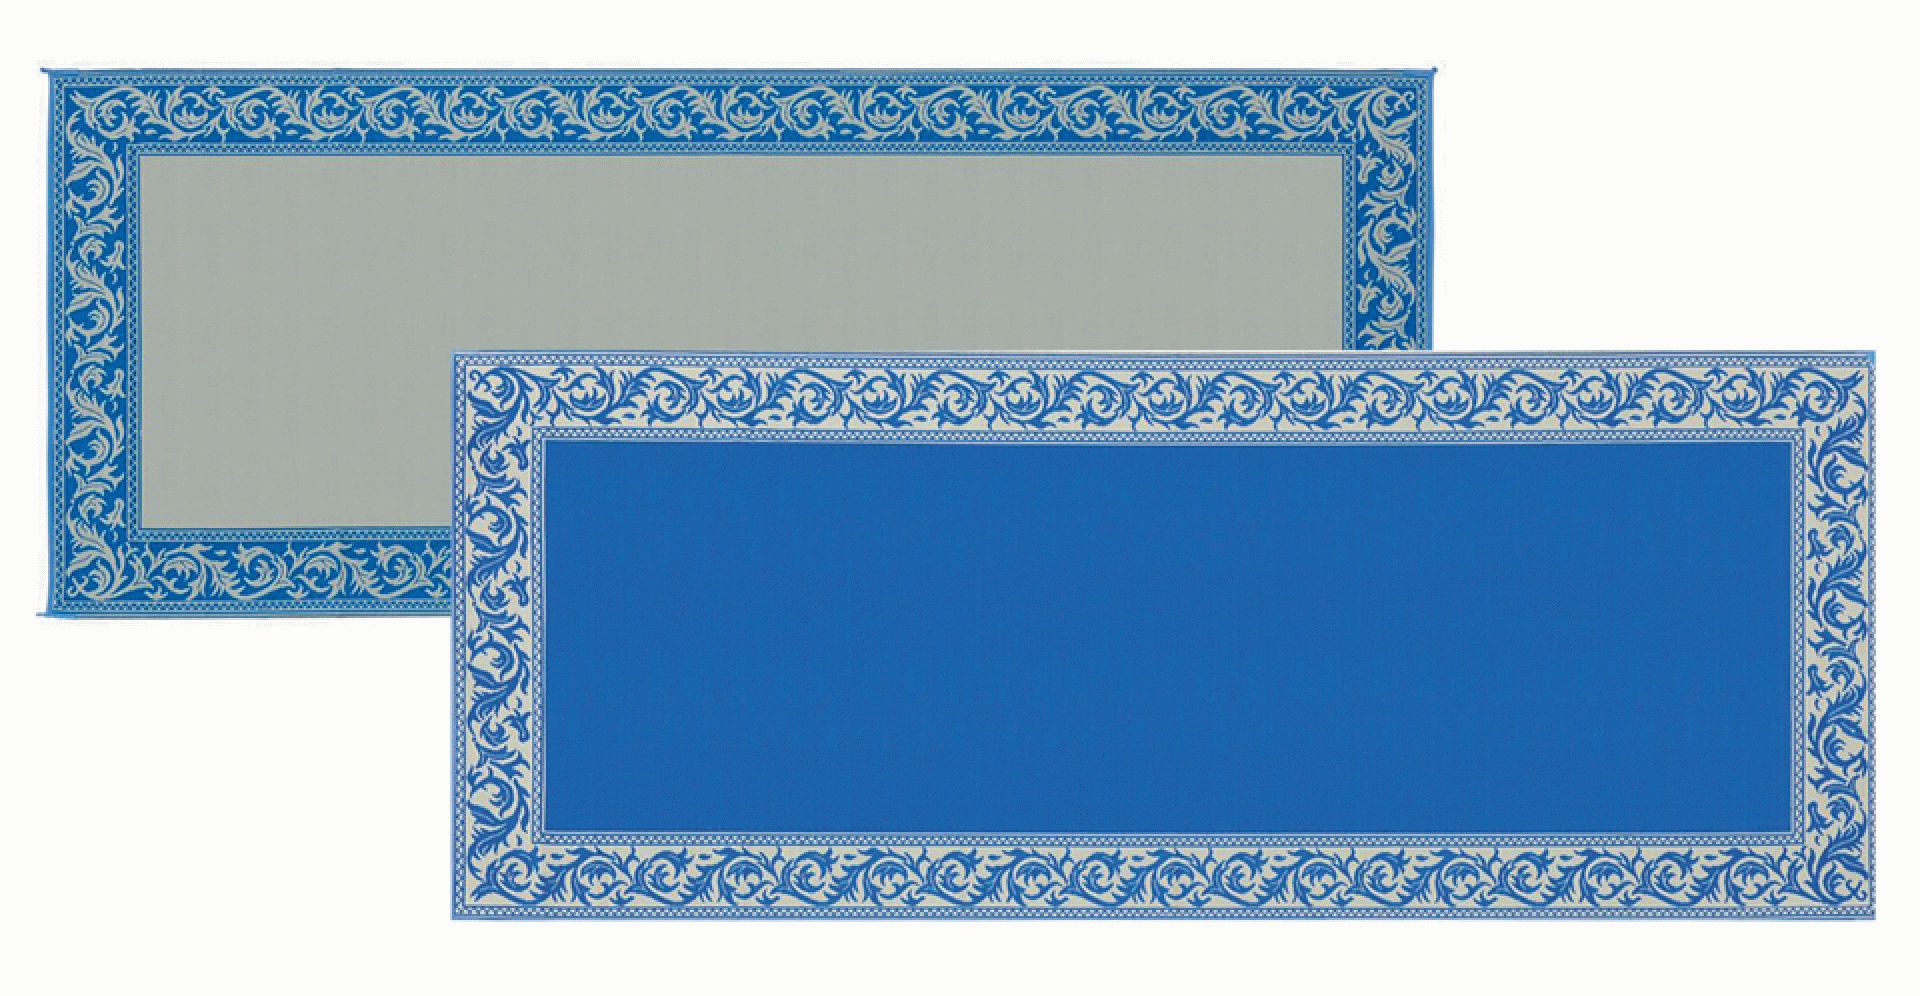 MINGS MARK INC. | RC3 | CLASSICAL DESIGN MAT 8' x 20' - BLUE/ BEIGE